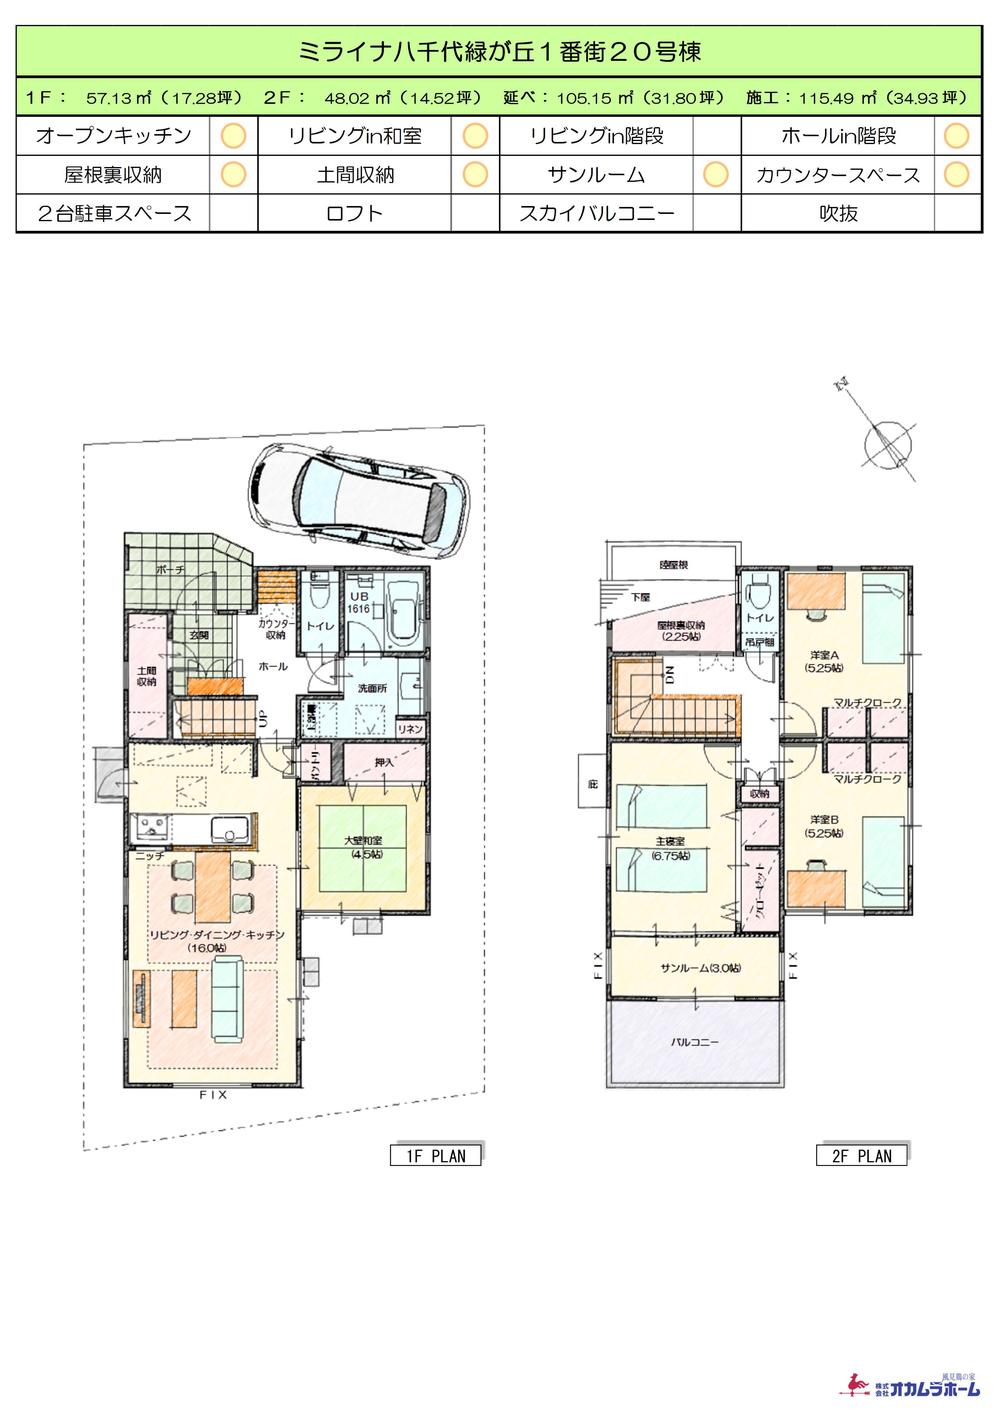 Floor plan. (20 Building), Price 33,800,000 yen, 4LDK+S, Land area 123.07 sq m , Building area 105.15 sq m